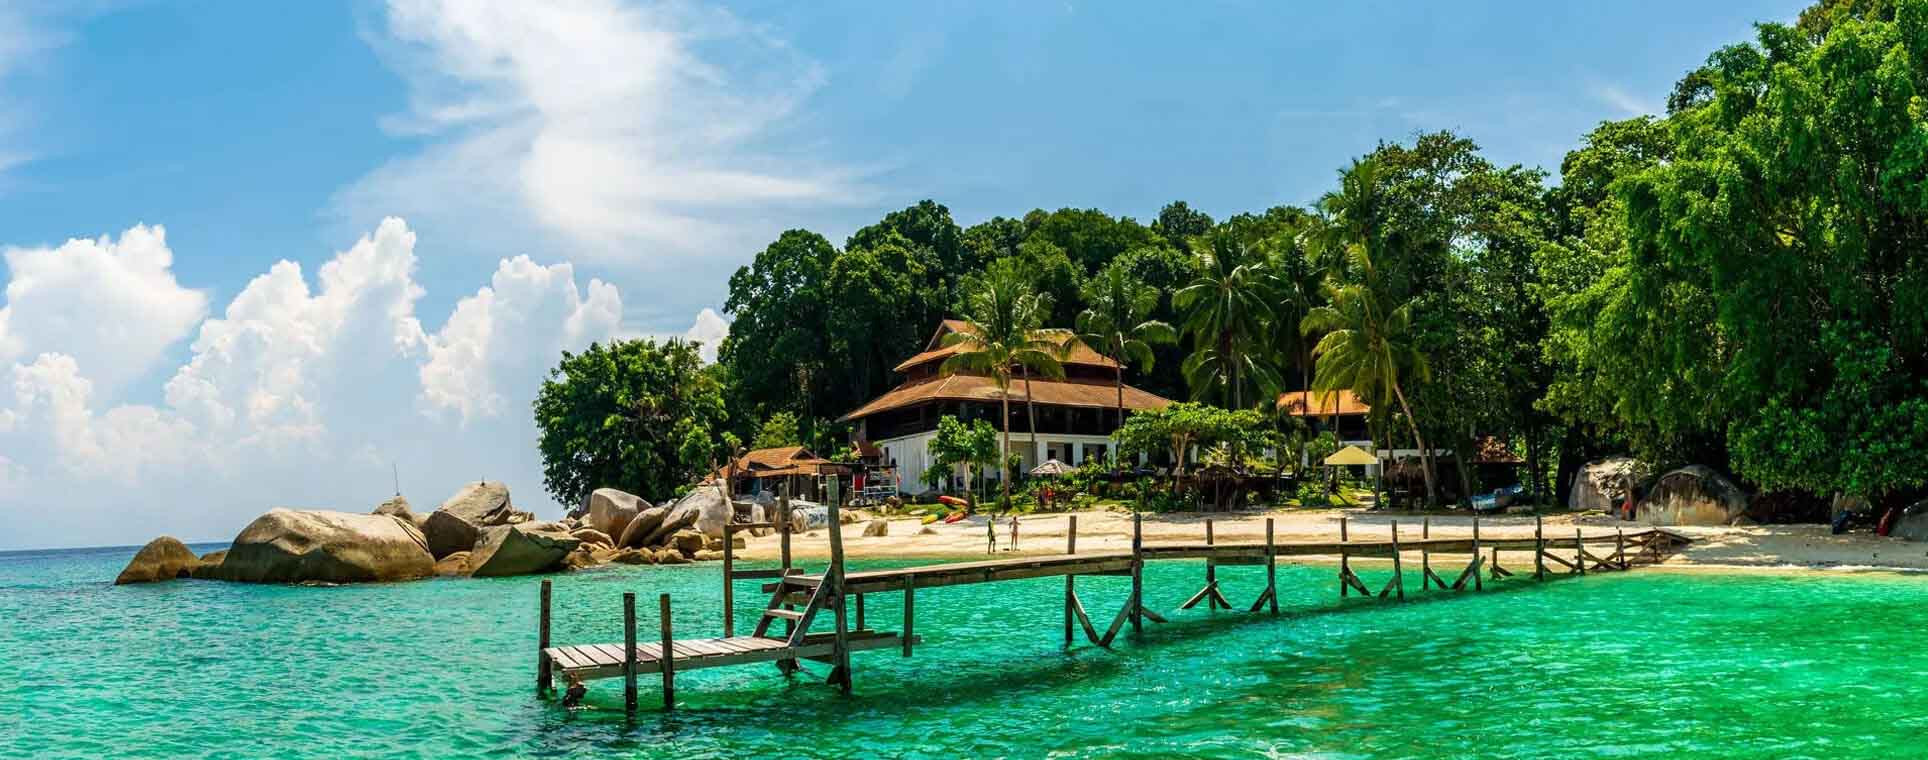 Malaysia Tour With Langkawi Island